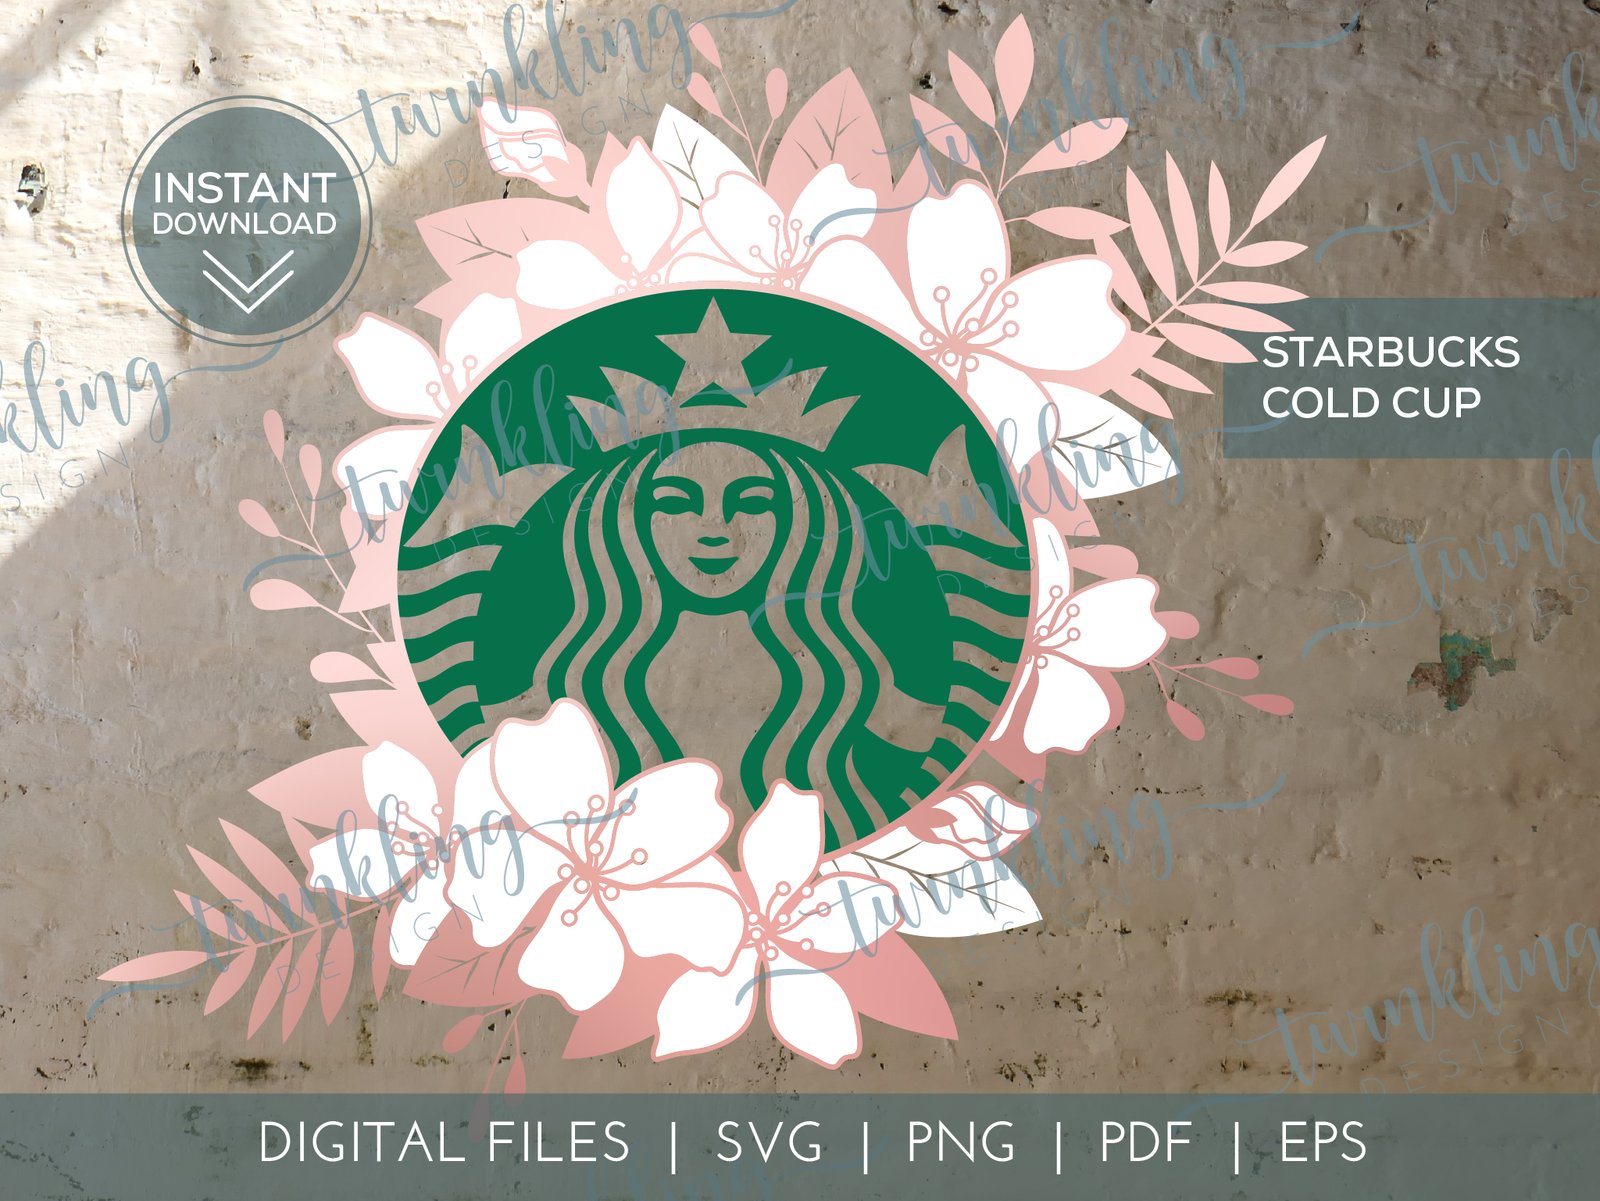 Starbucks Cold Cup LV Circle